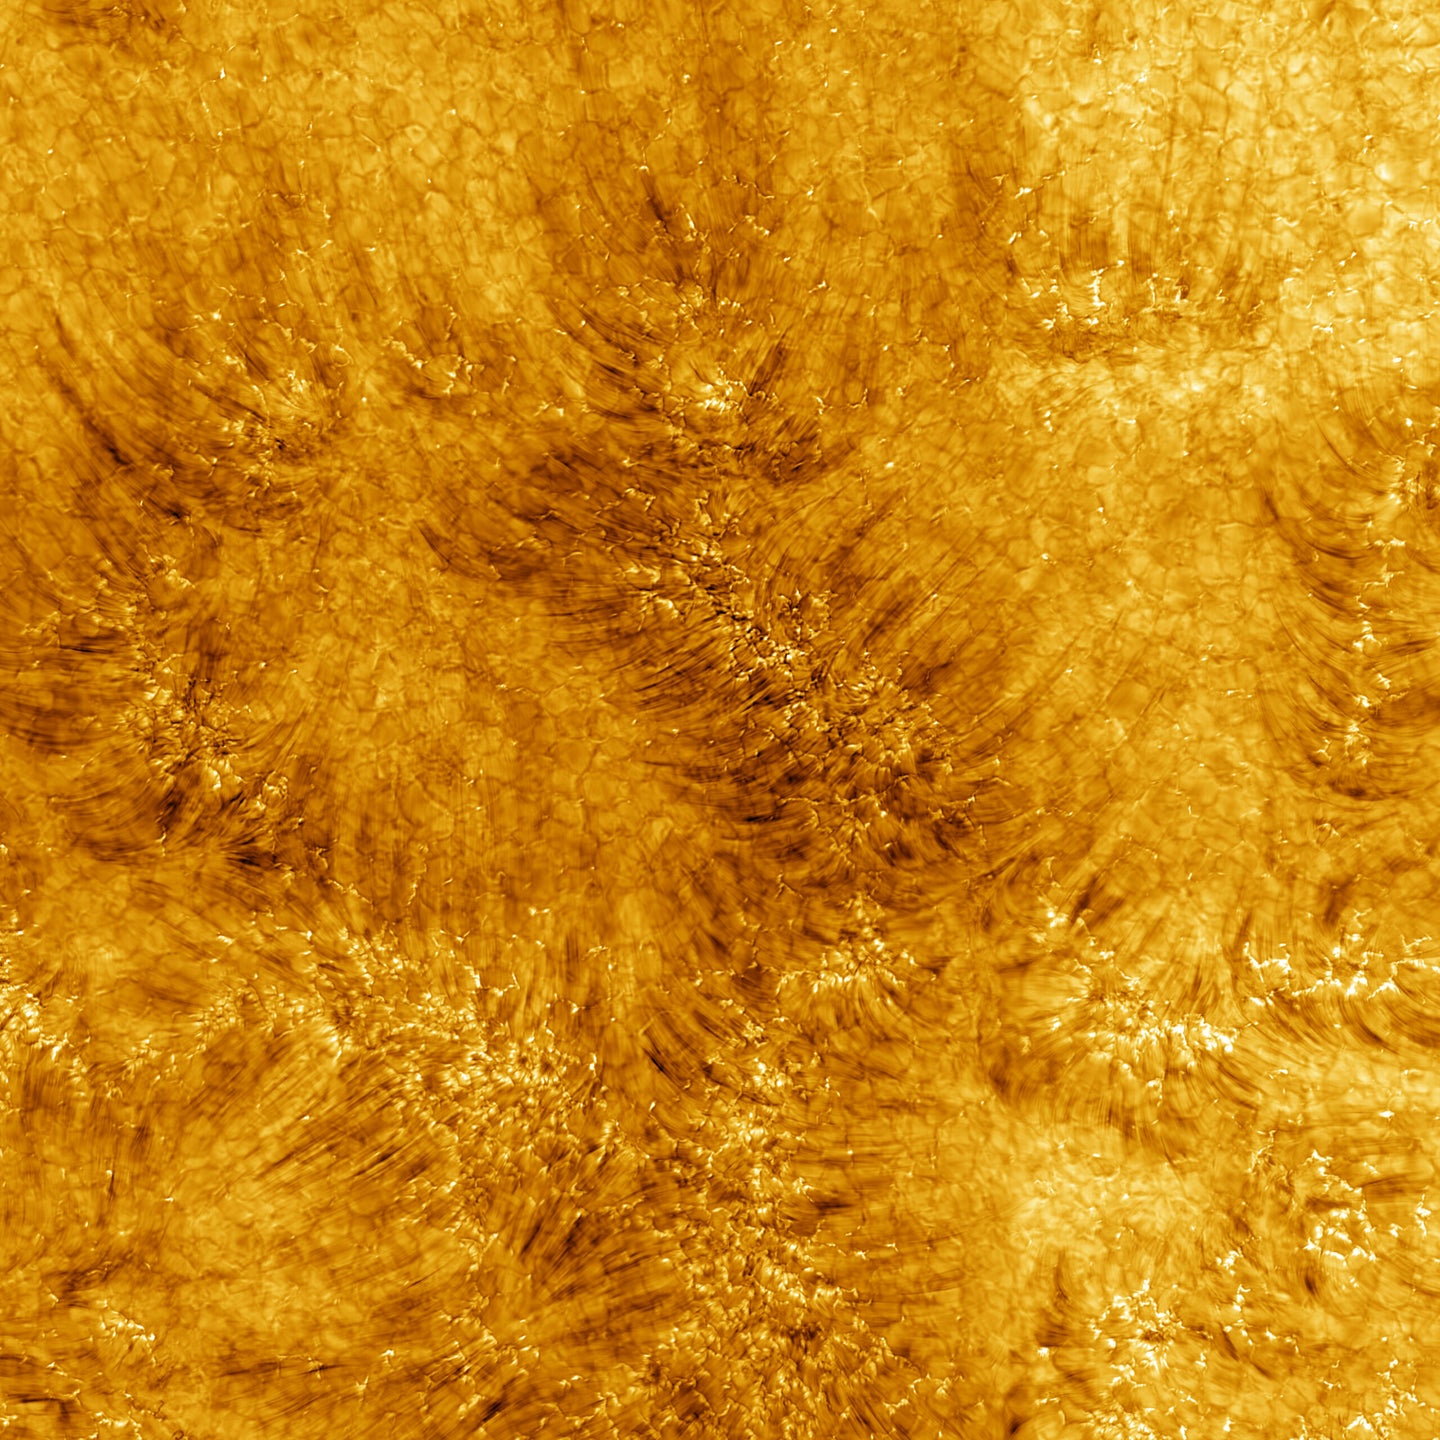 Inouye Solar Telescope images sun chromosphere